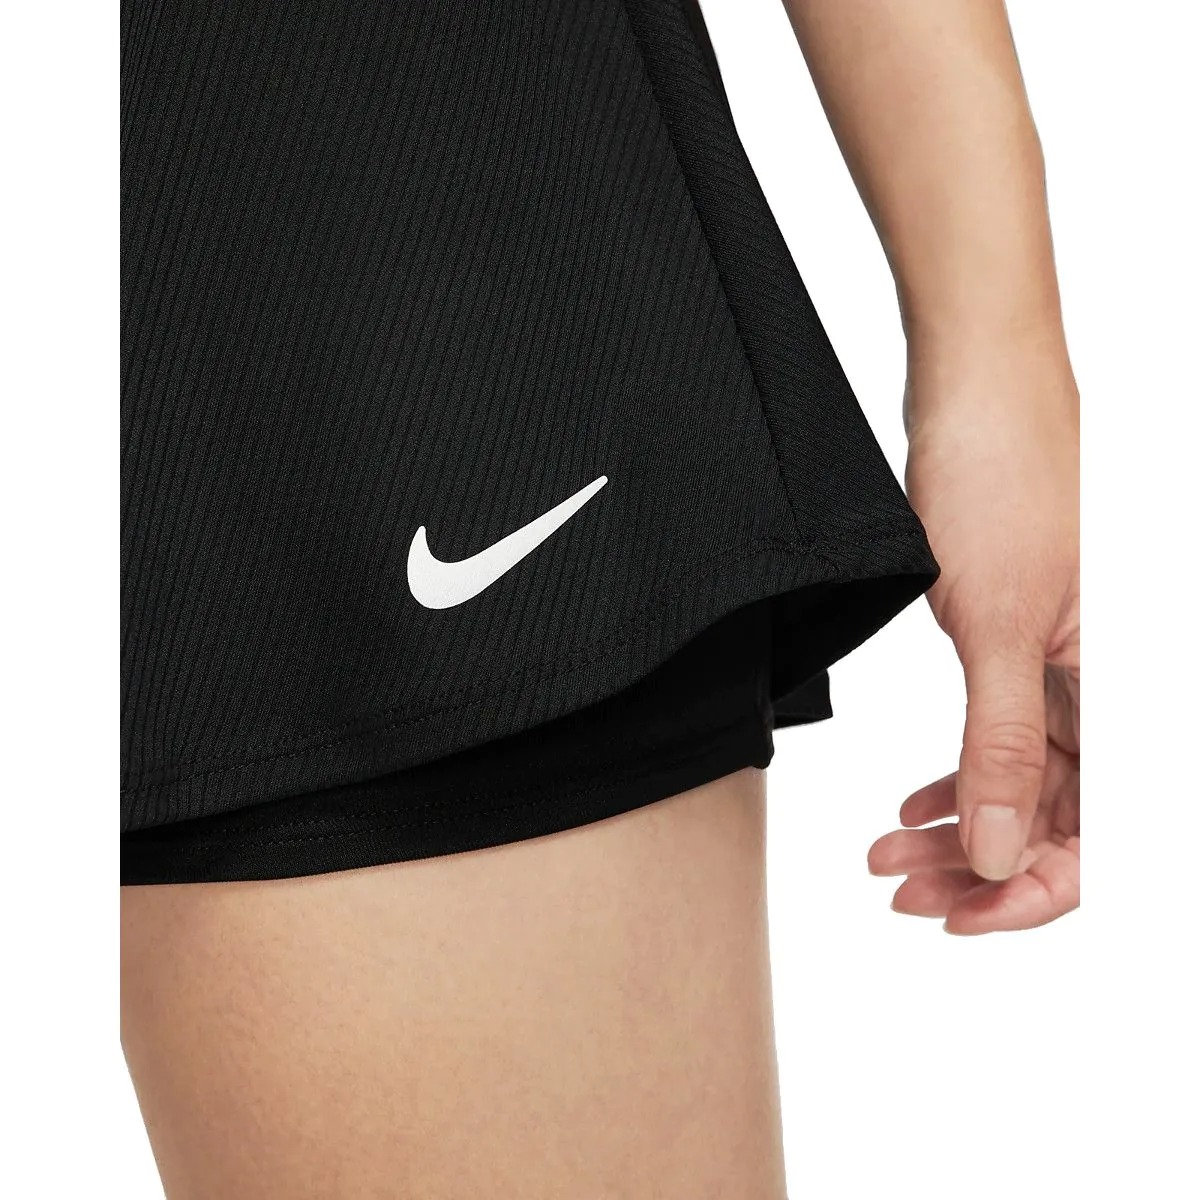 NikeCourt Dry Women's Tennis Skirt 939318-011